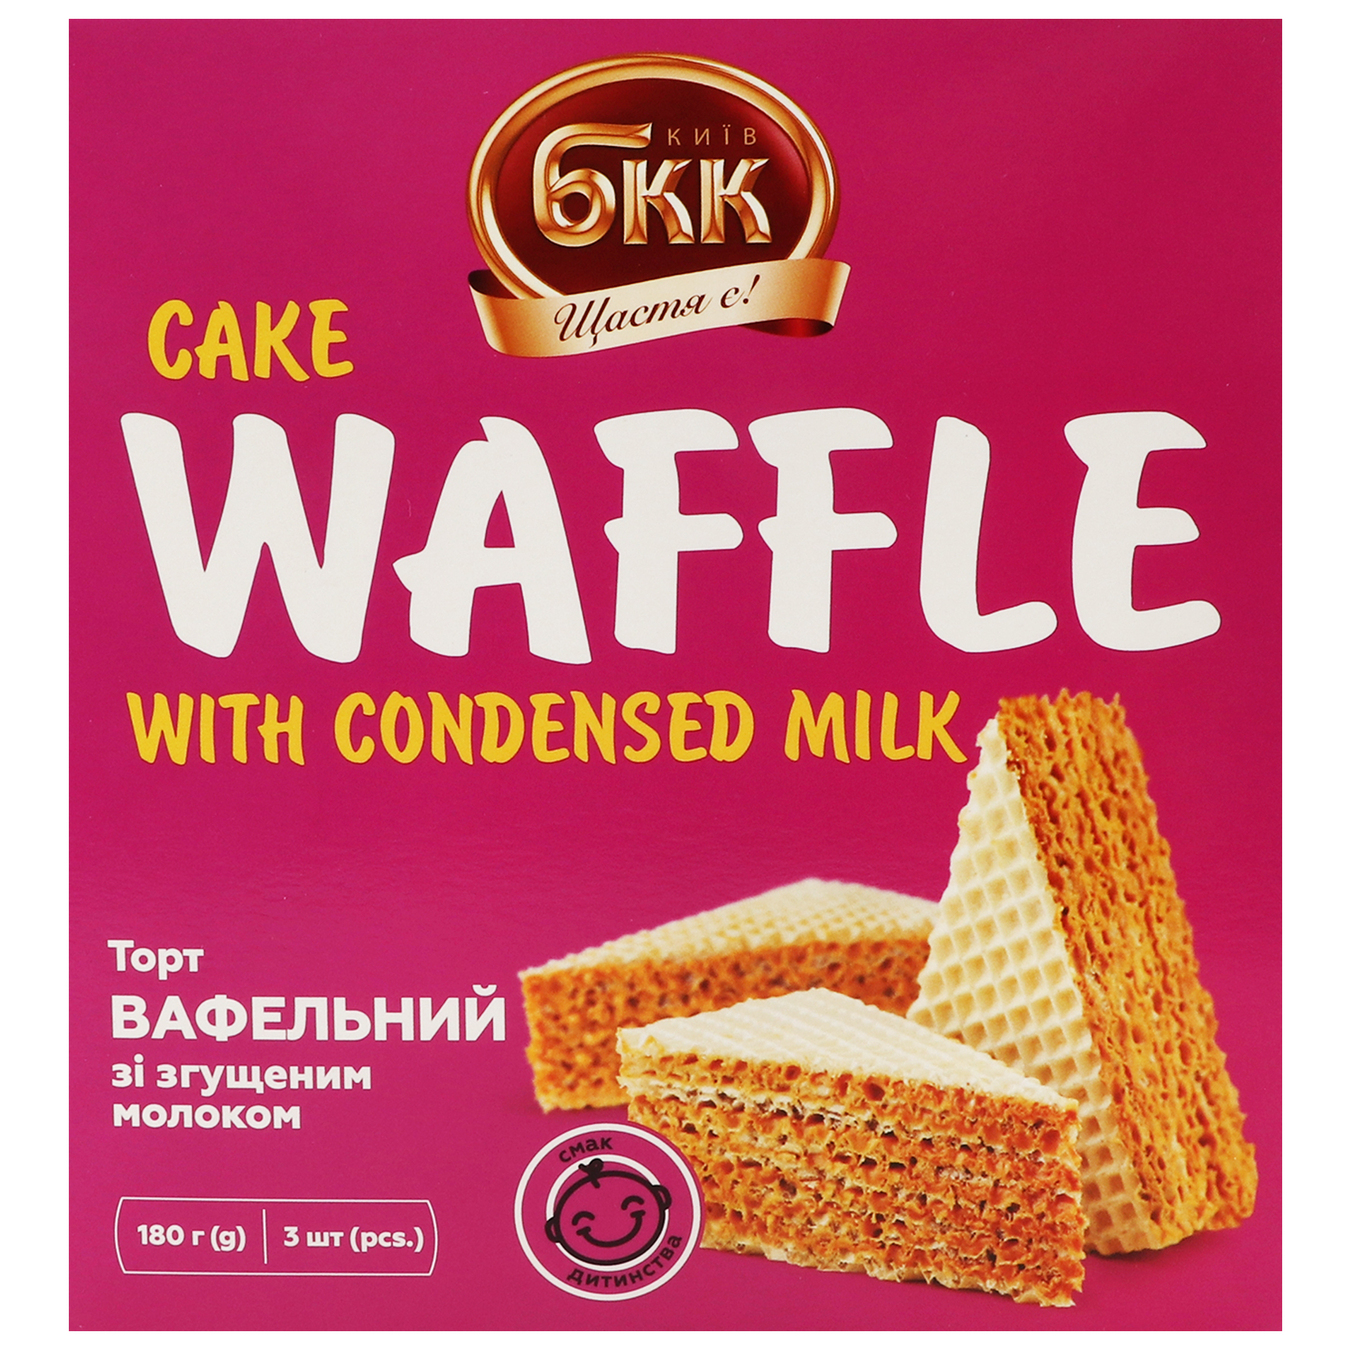 Cake BKK Waffle with condensed milk 180g